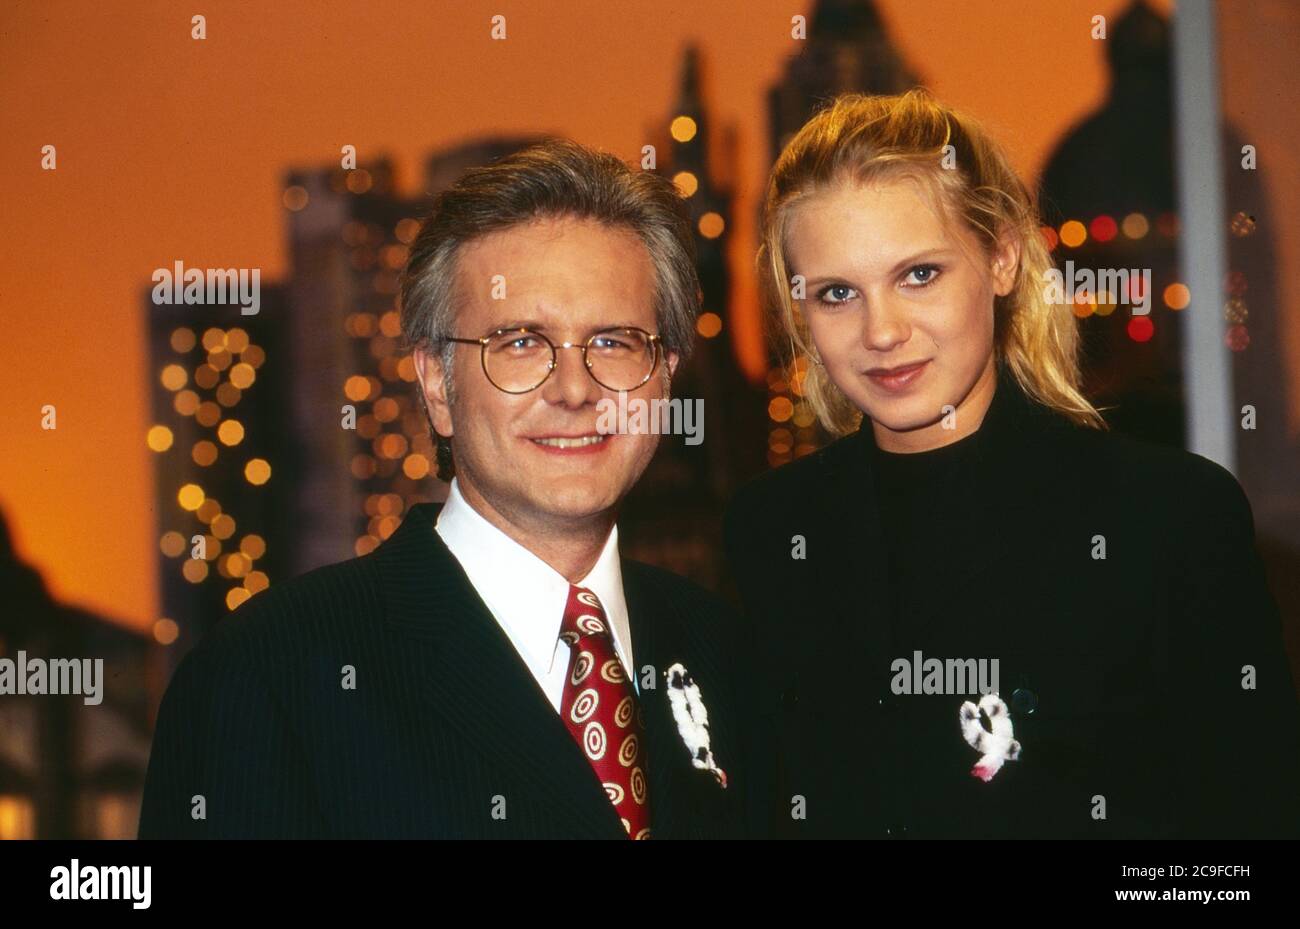 Harald-Schmidt-Show, Unterhaltungstalkshow, Deutschland 1995 - 2003, Sendung vom 25. Oktober 1996, Harald Schmidt mit Gaststar Gymnastin Magdalena Brzeska Foto de stock